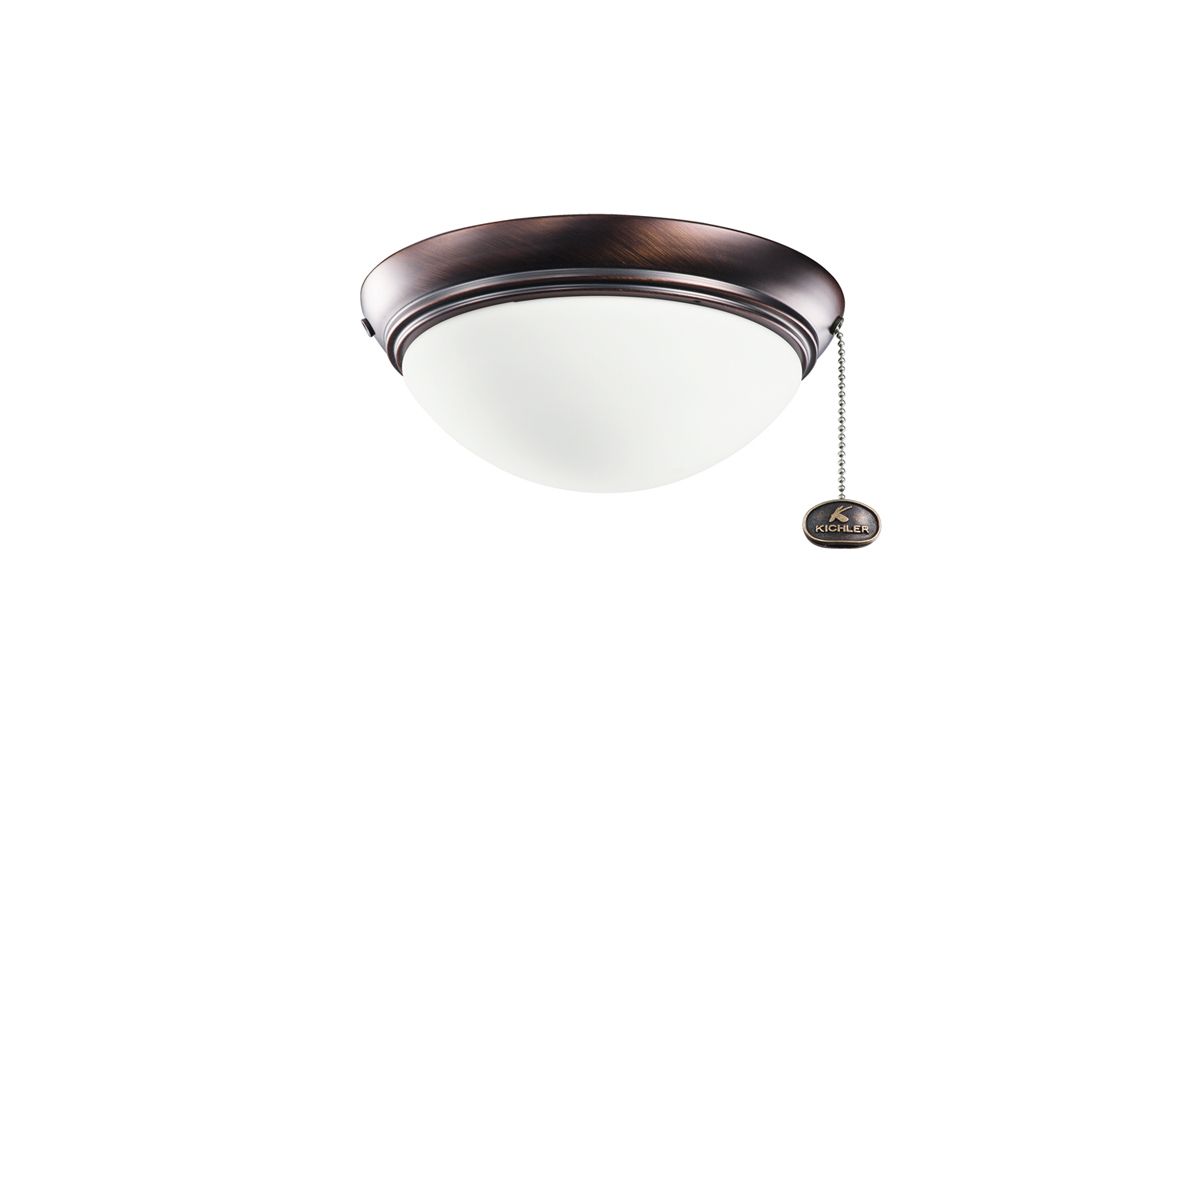 Kichler Accessories Low Profile Ceiling Fan Light Kit In Oil Brushed Bronze